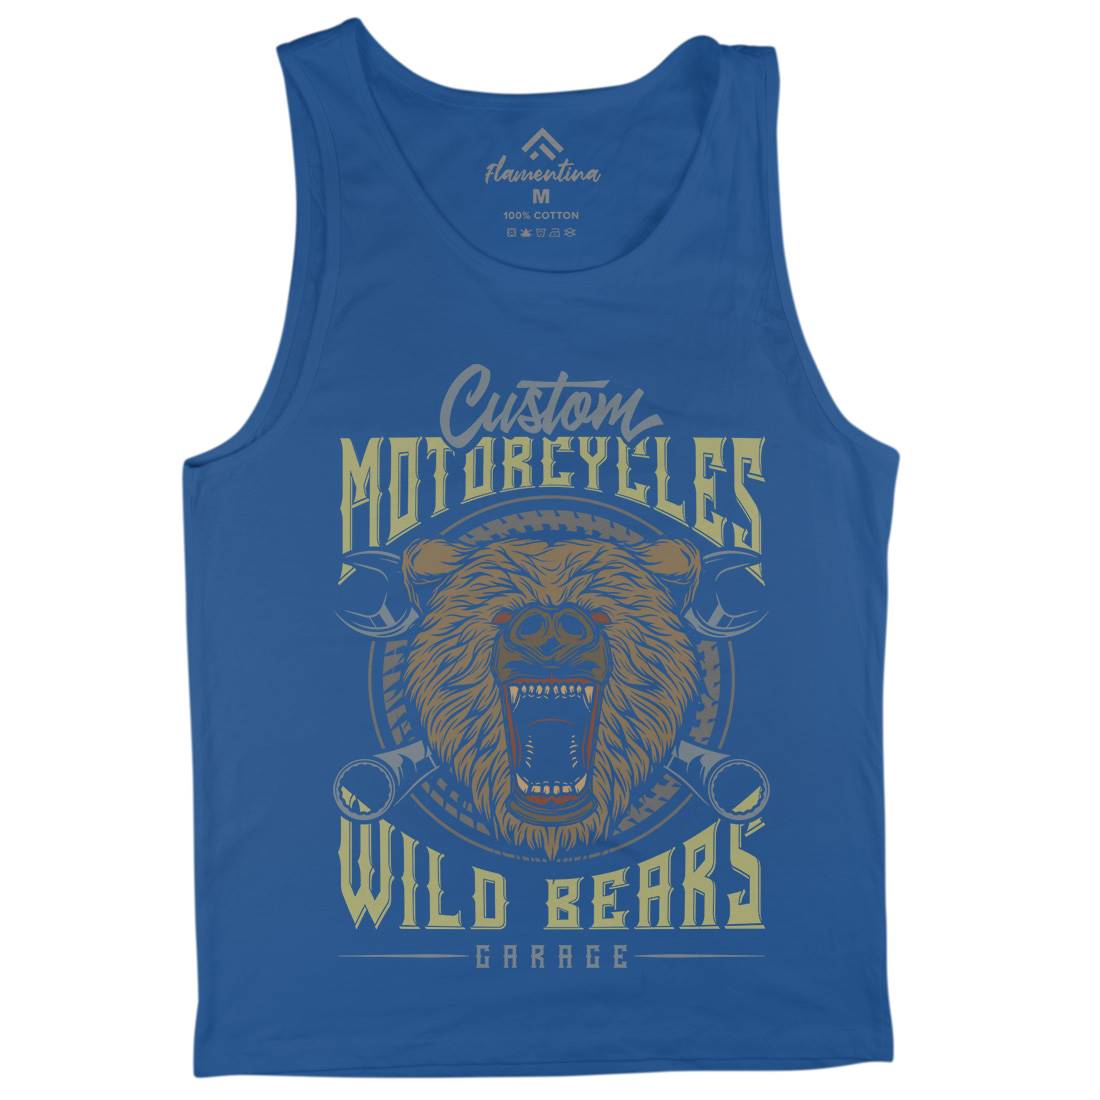 Wild Bears Mens Tank Top Vest Motorcycles B788